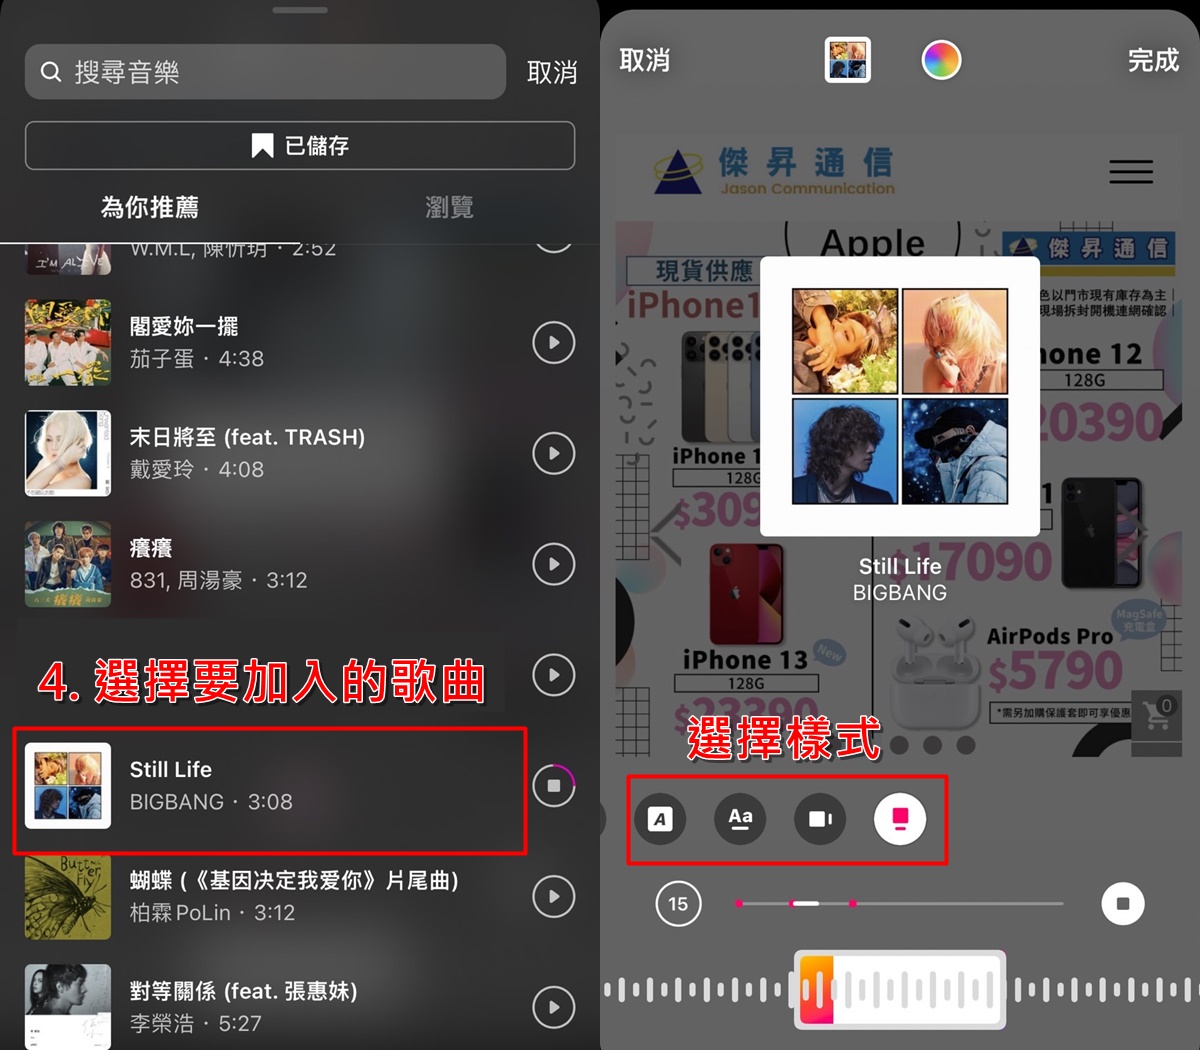 mifm 免費音樂 APP 百萬首歌曲無限暢聽還有廣播電台，支援背景播放(iOS)